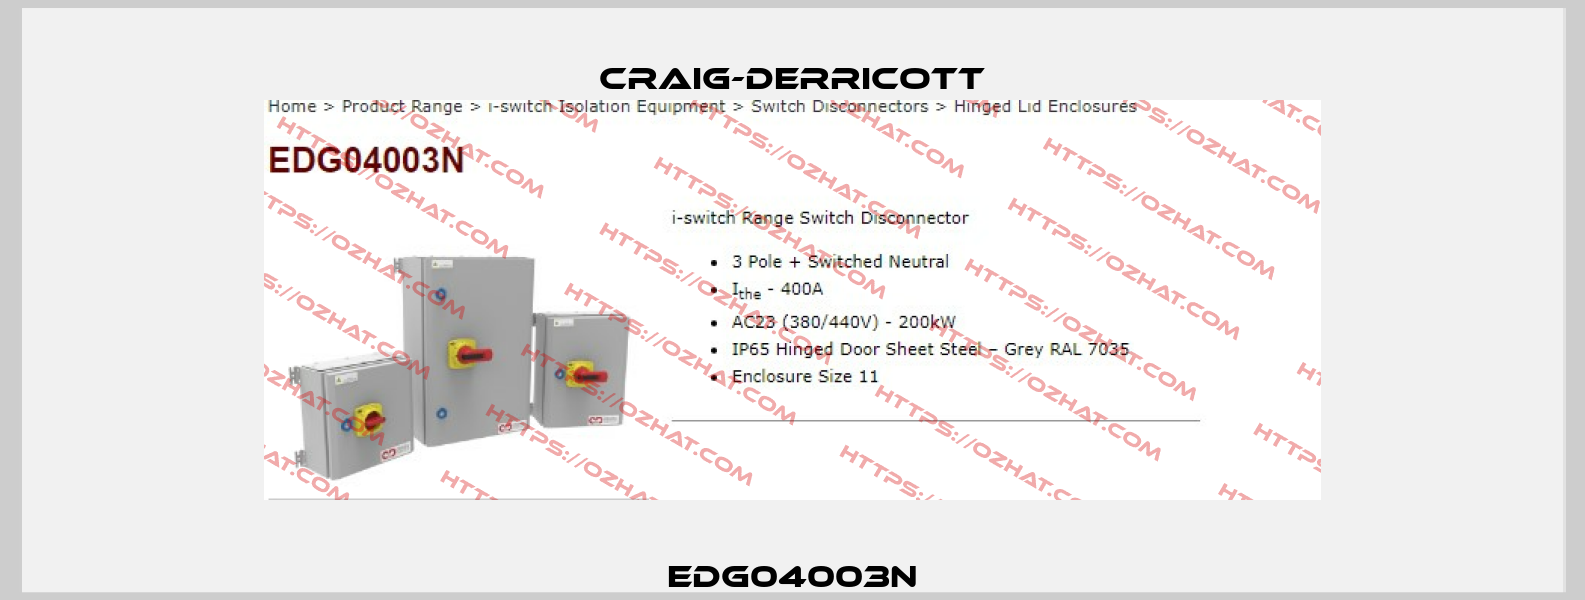 EDG04003N Craig-Derricott